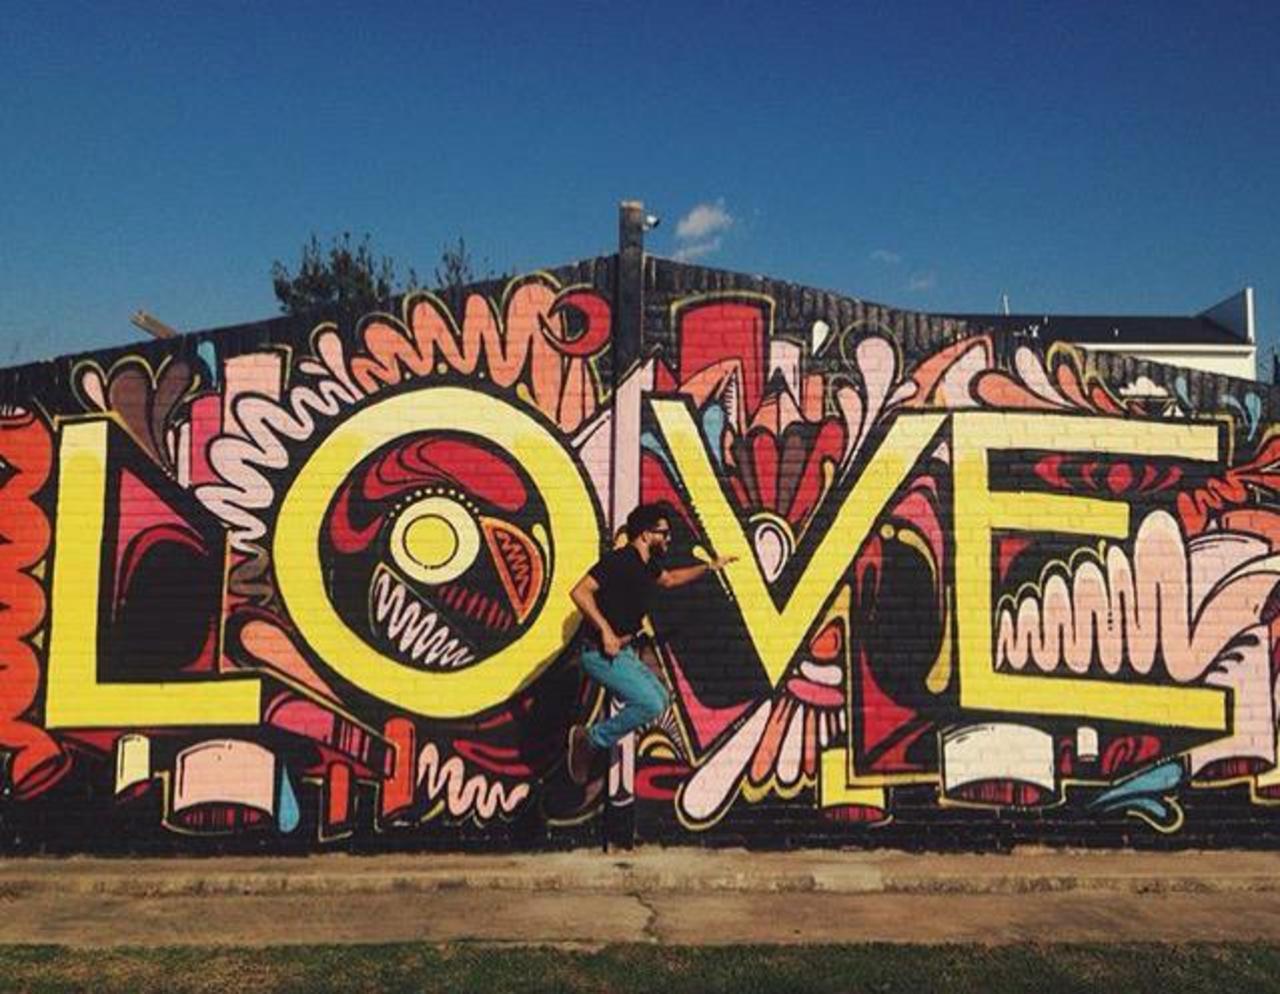 RT ArchaicManor "Love ❤️
Street Art by WileyArt

#art #graffiti #mural #streetart http://t.co/2tsYS4AkFm yo"